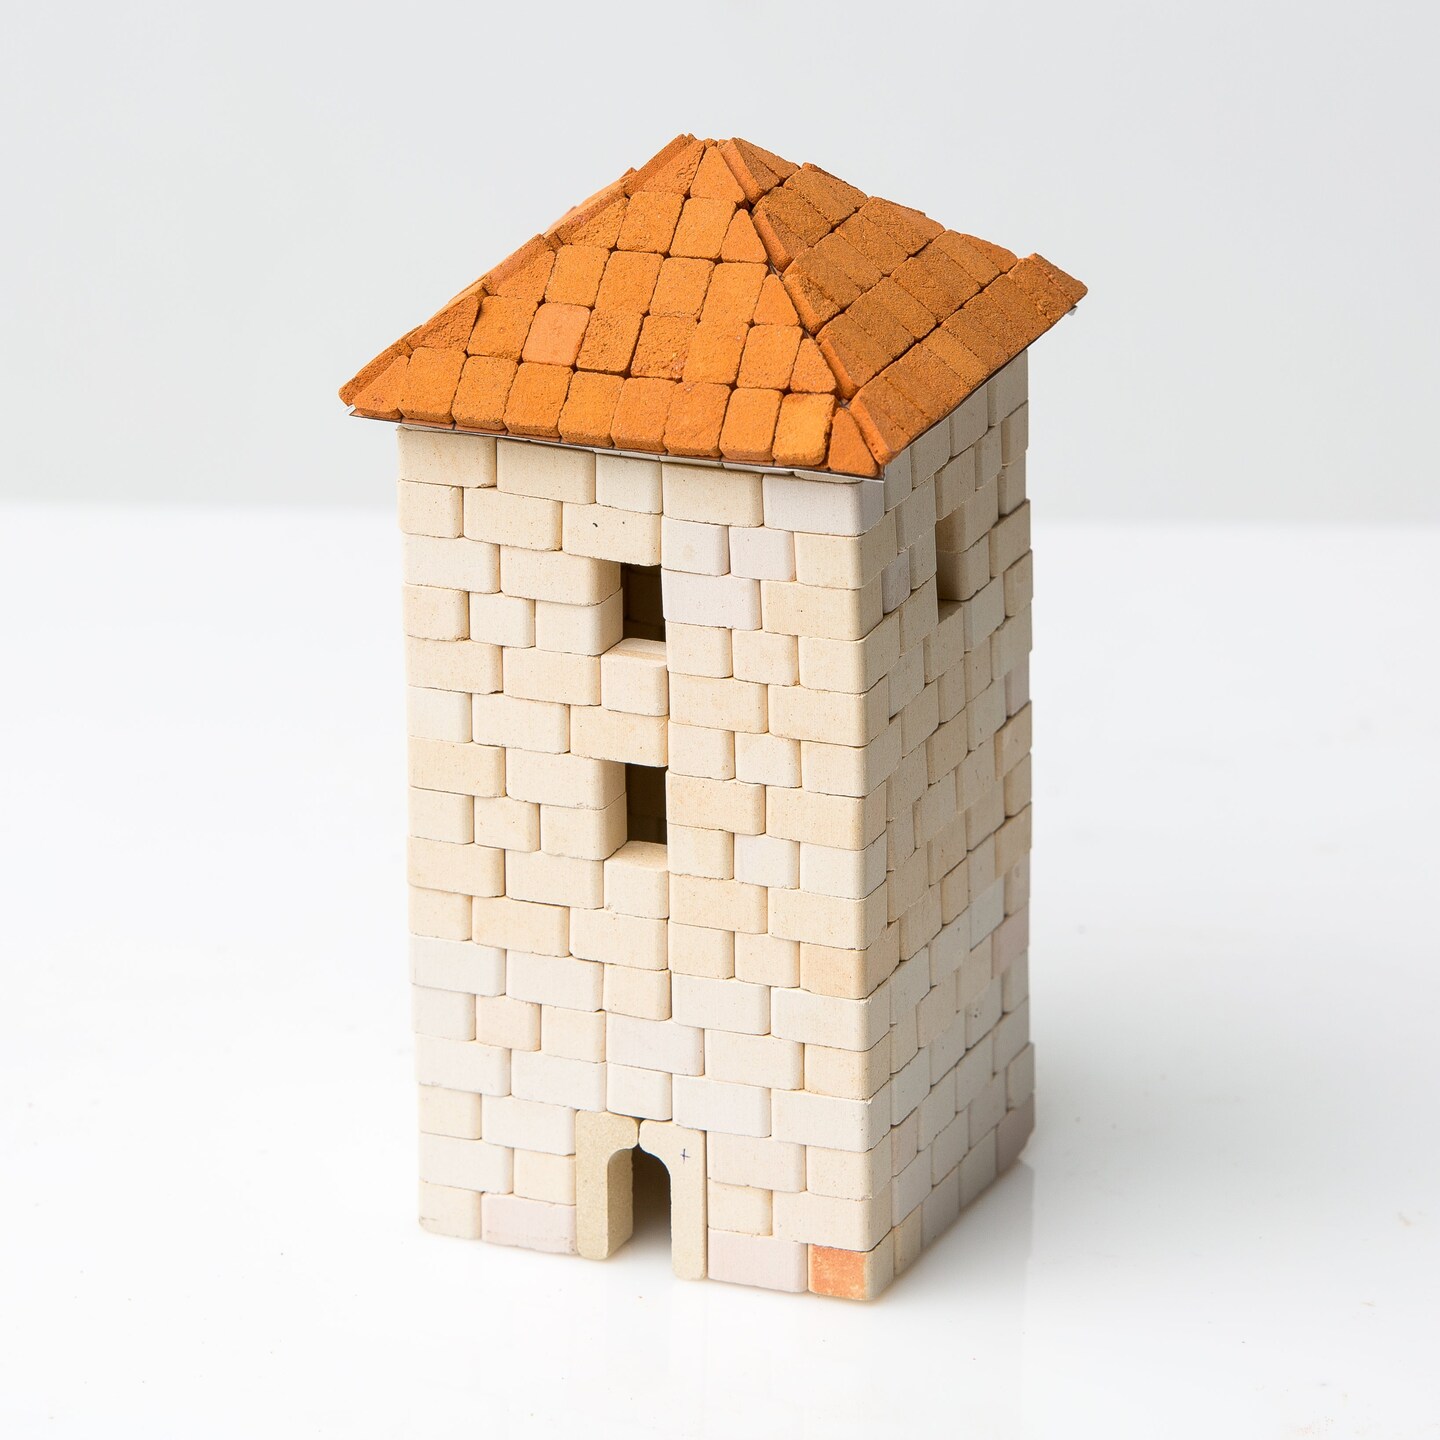 Mini Bricks Construction Set - Tower